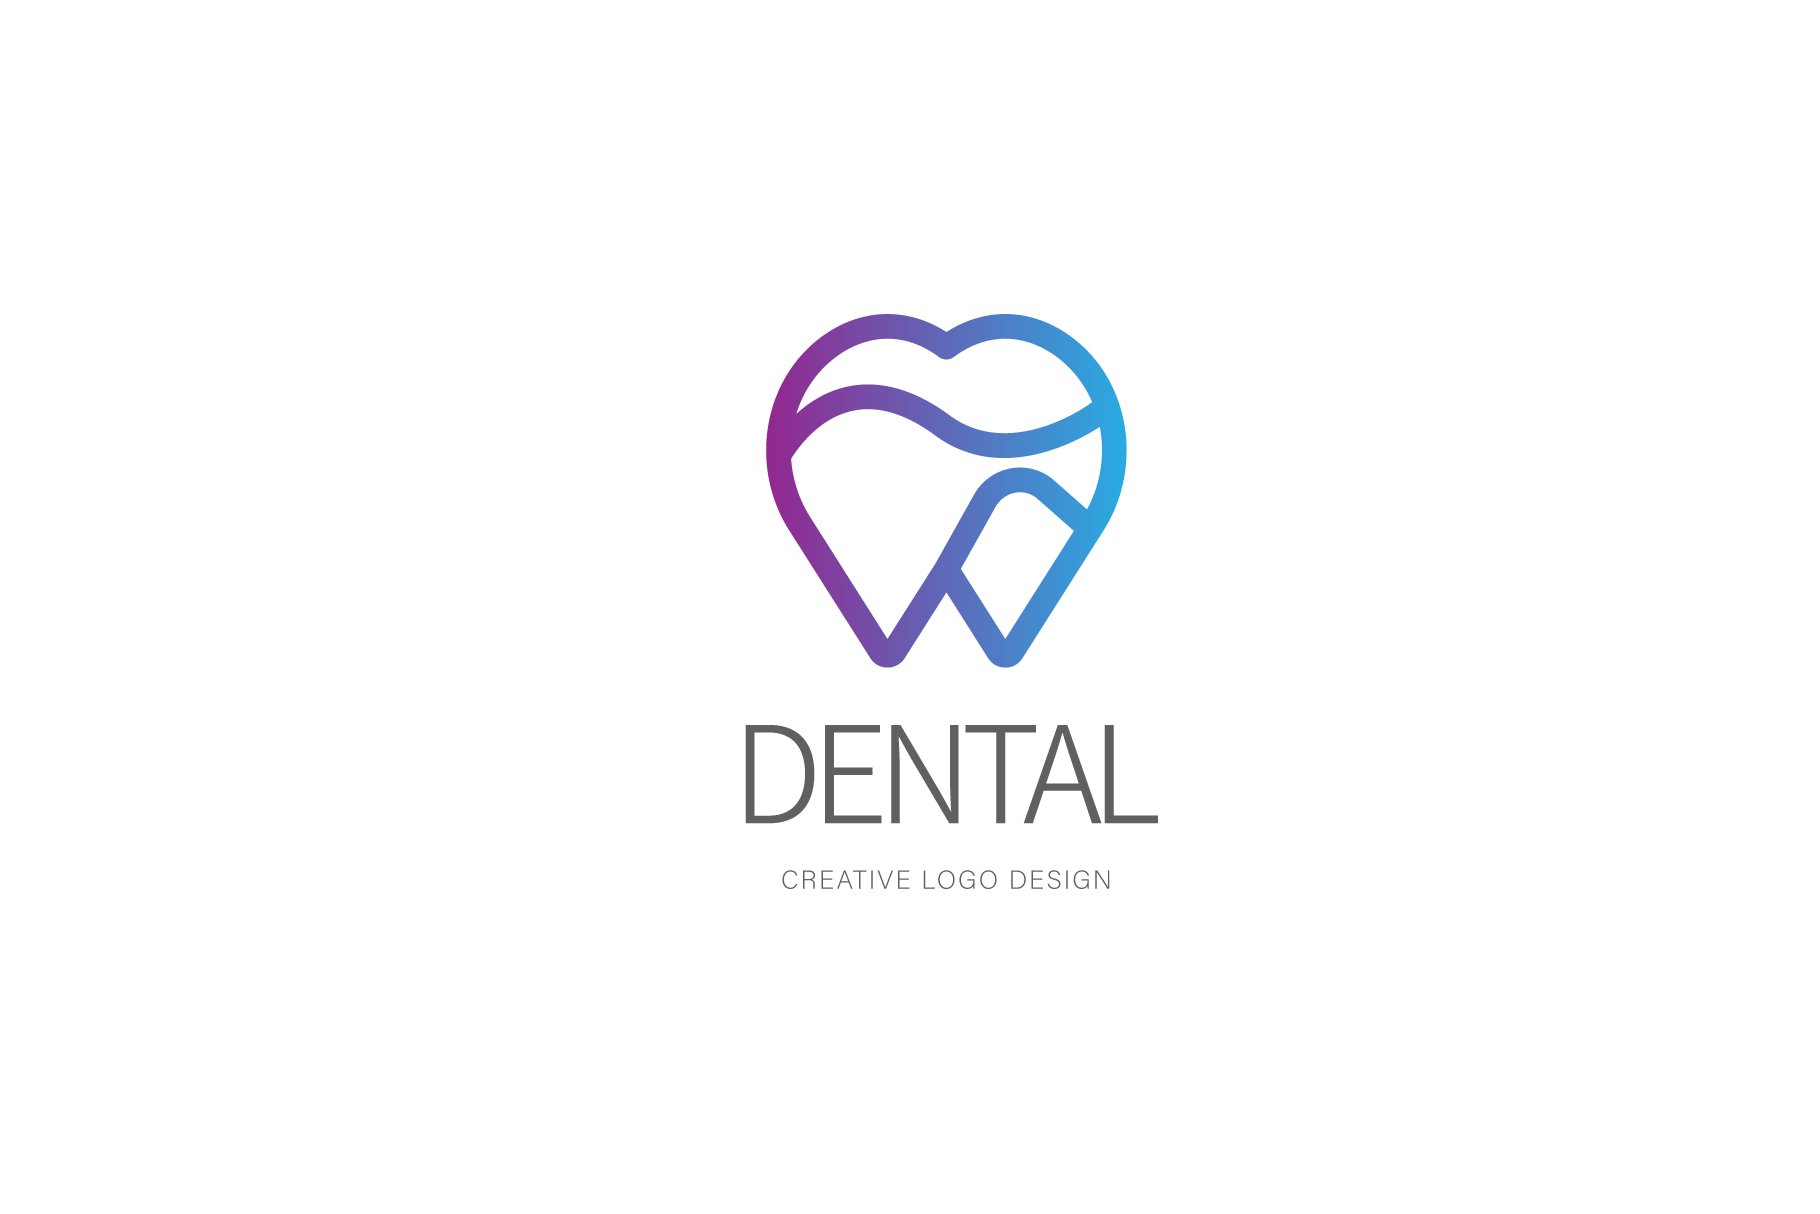 Dental logo preview image.